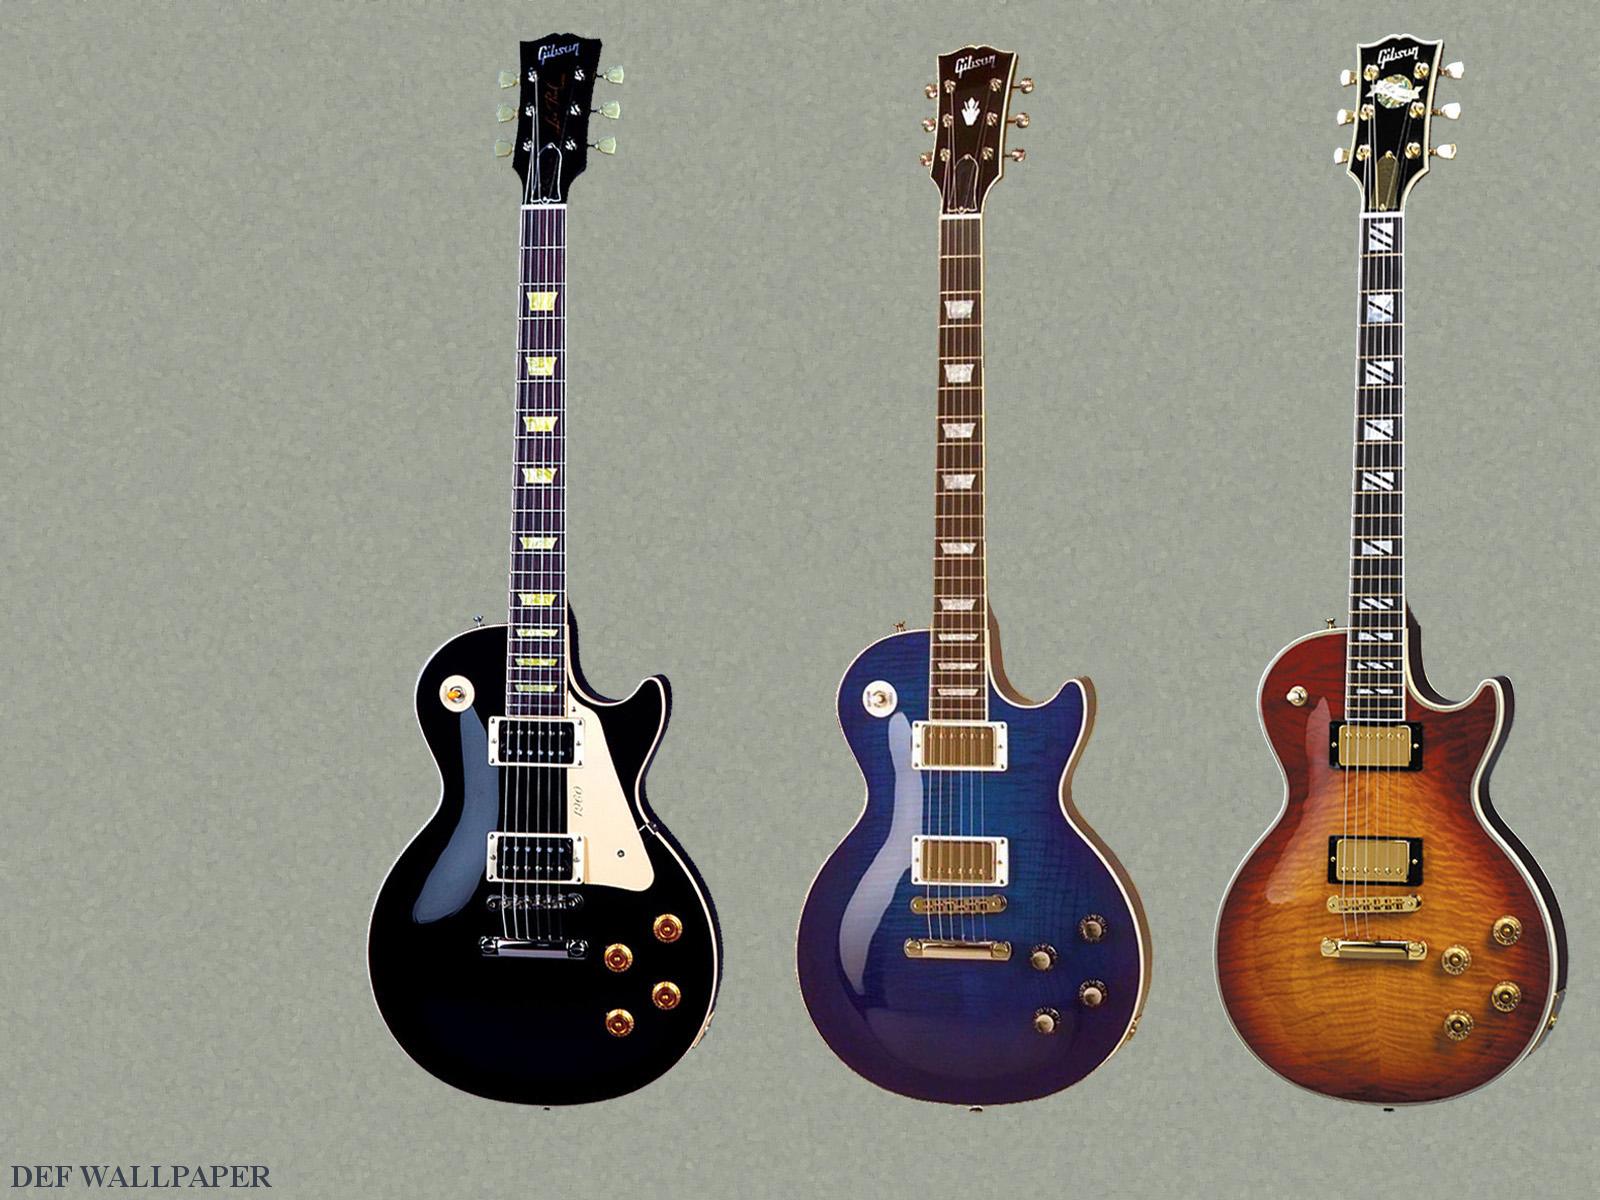 Gibson Guitar Wallpaper 22878 Hd Wallpapers in Music   Imagescicom